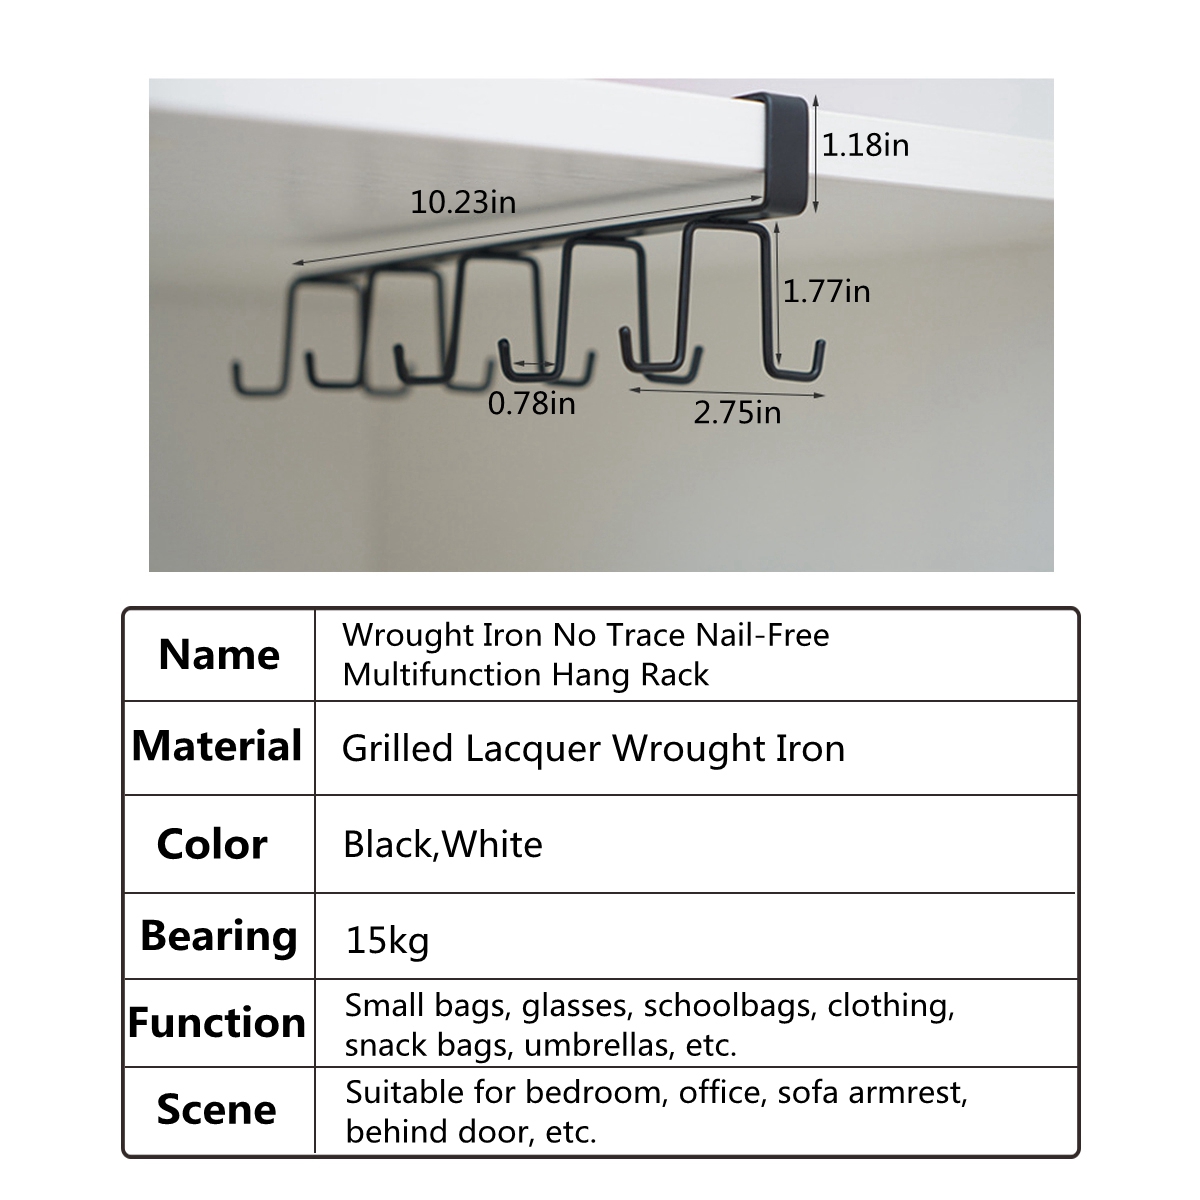 Wrought-Iron-No-Trace-Nail-Free-Multifunction-Storage-Hang-Rack-1693993-2